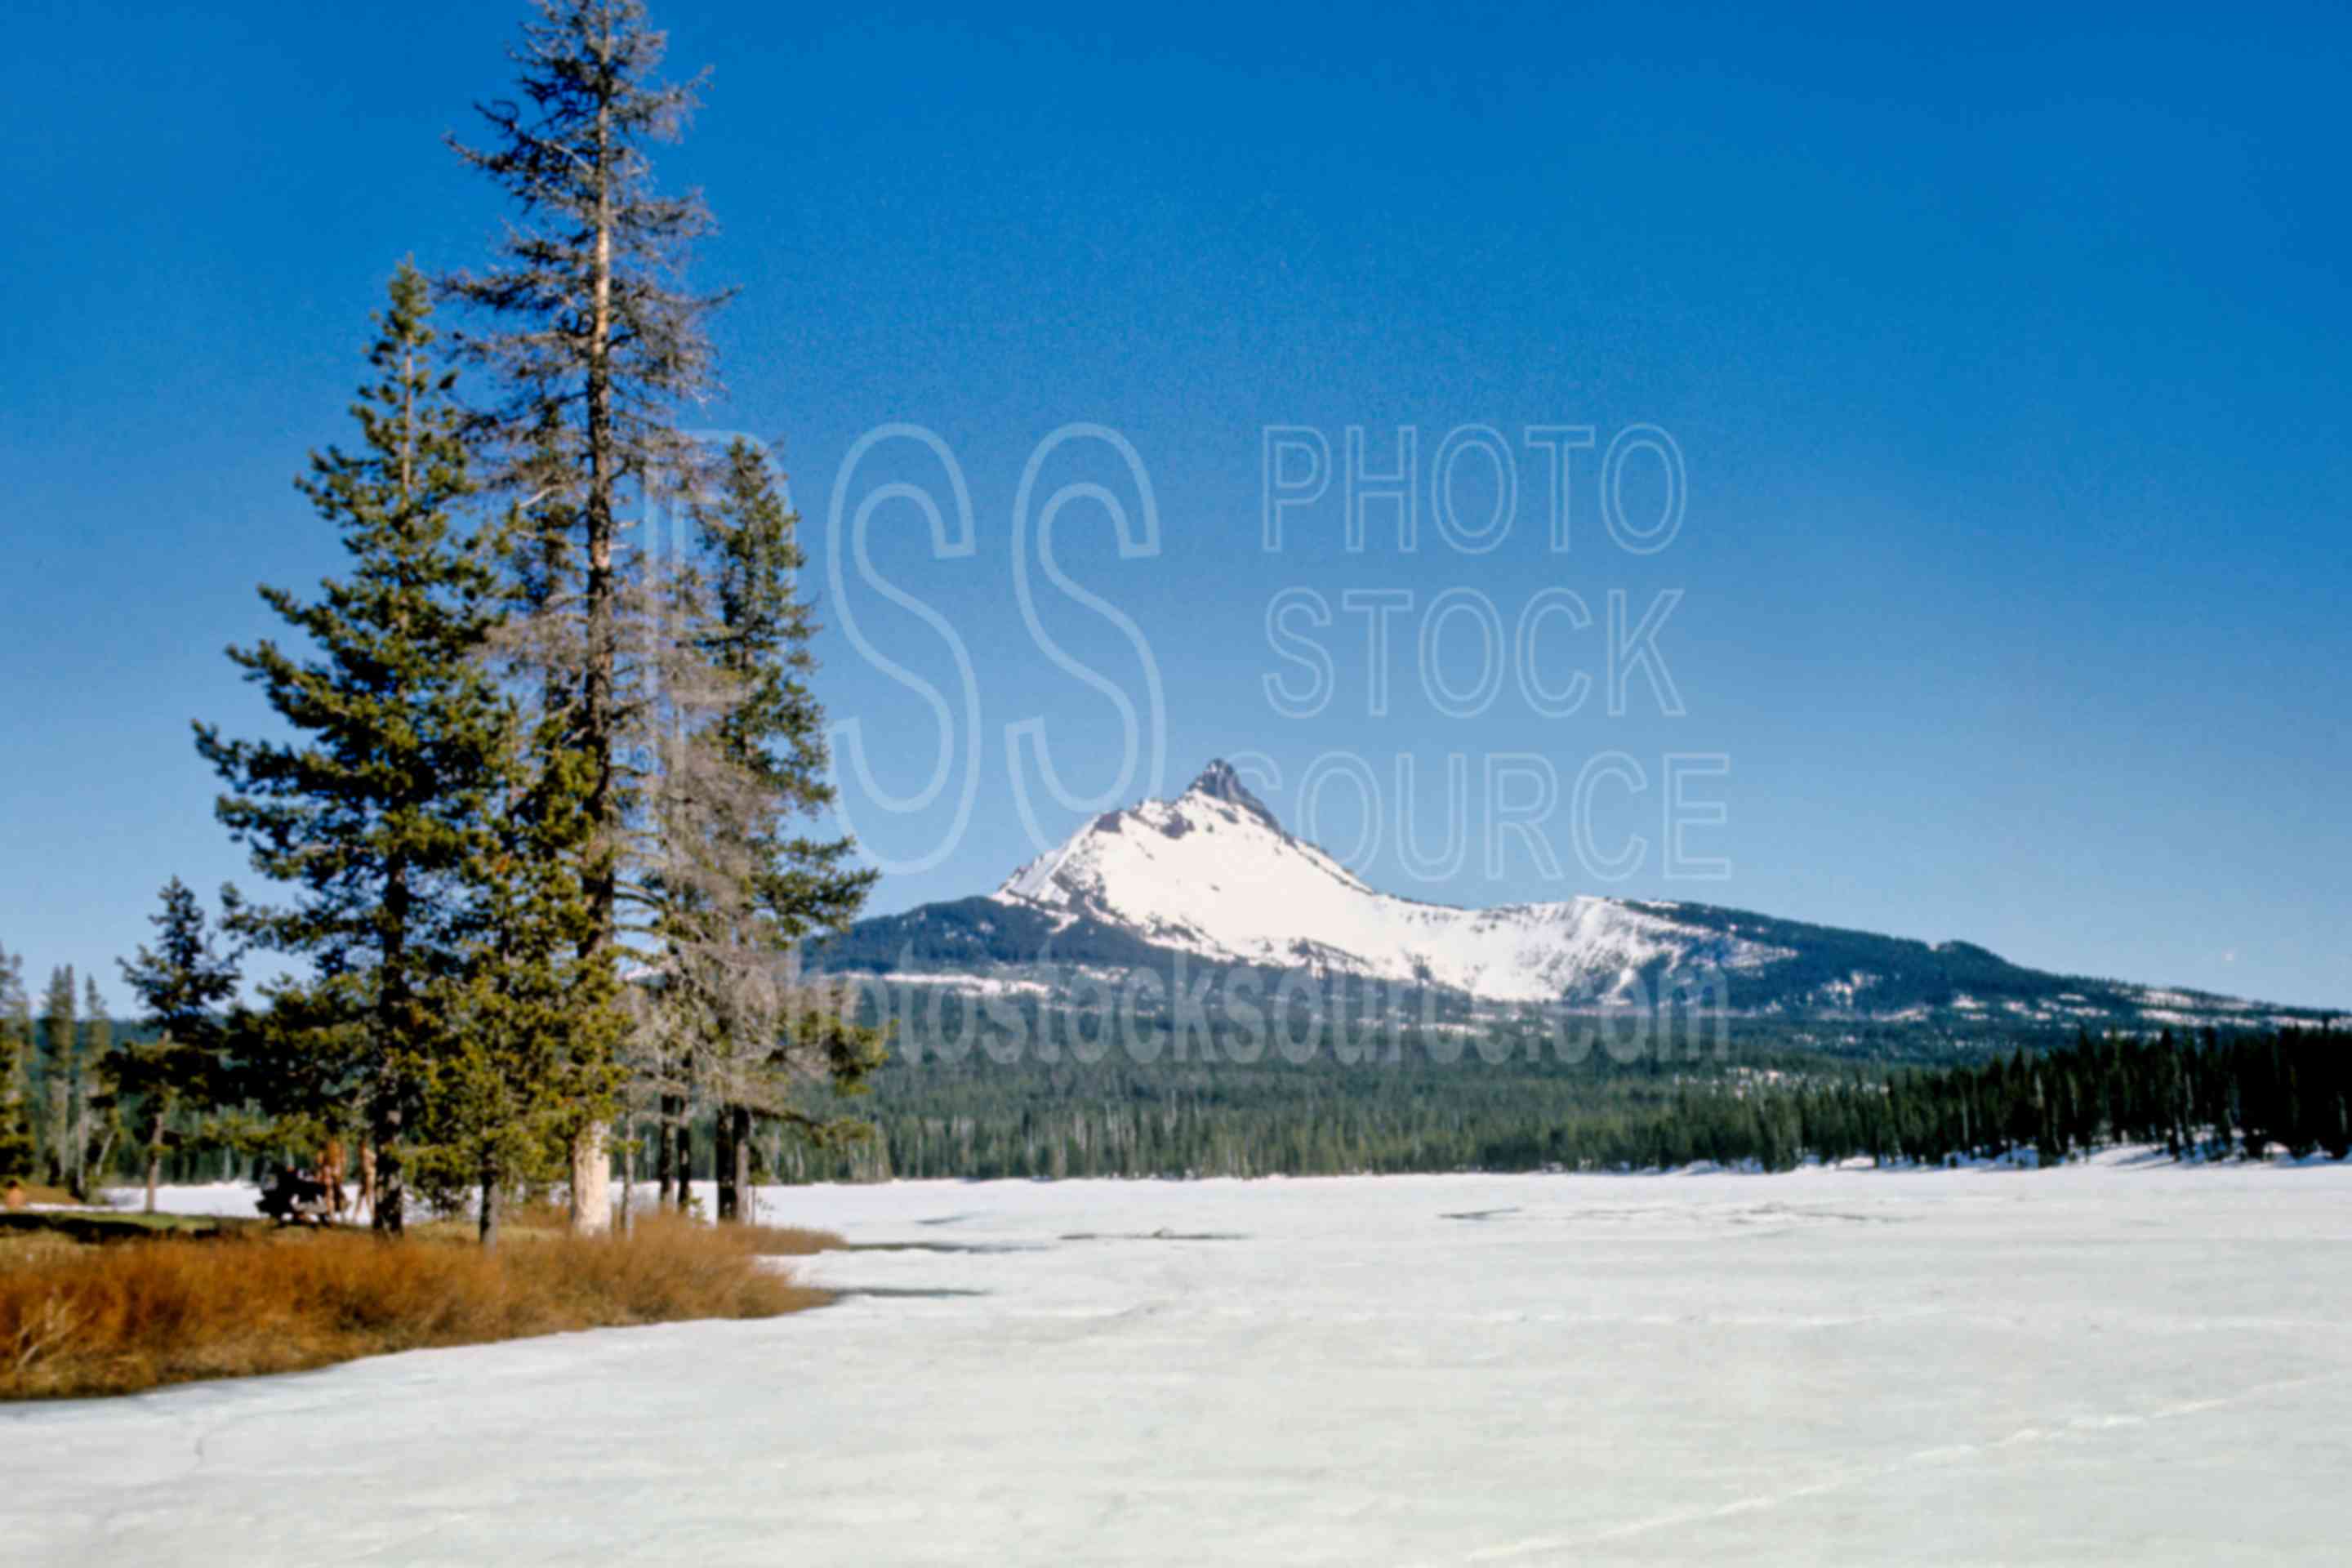 Big Lake, Mt. Washington,santiam pass,snow,frozen lake,ices,mt. washington,big lake,lake,mount,winter,lakes rivers,mountains